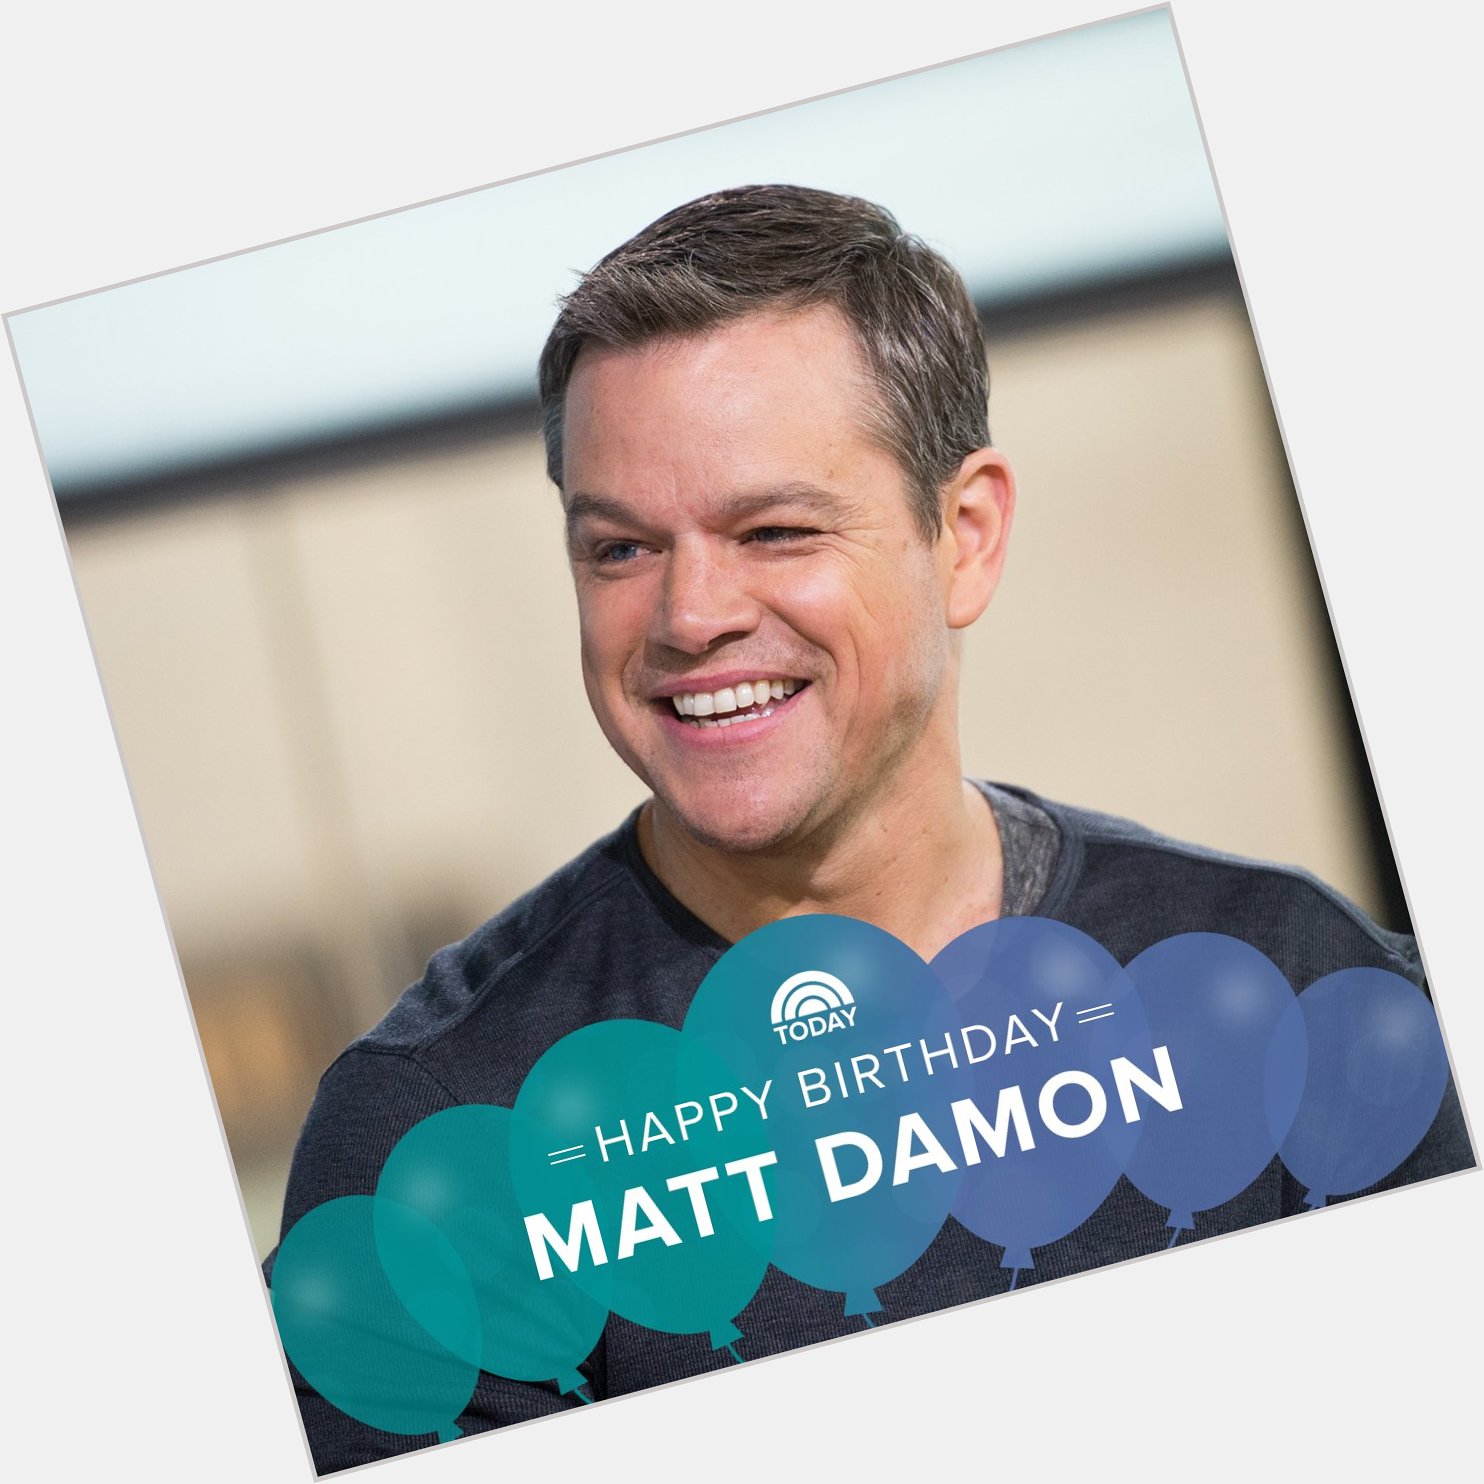 Happy birthday, Matt Damon!  